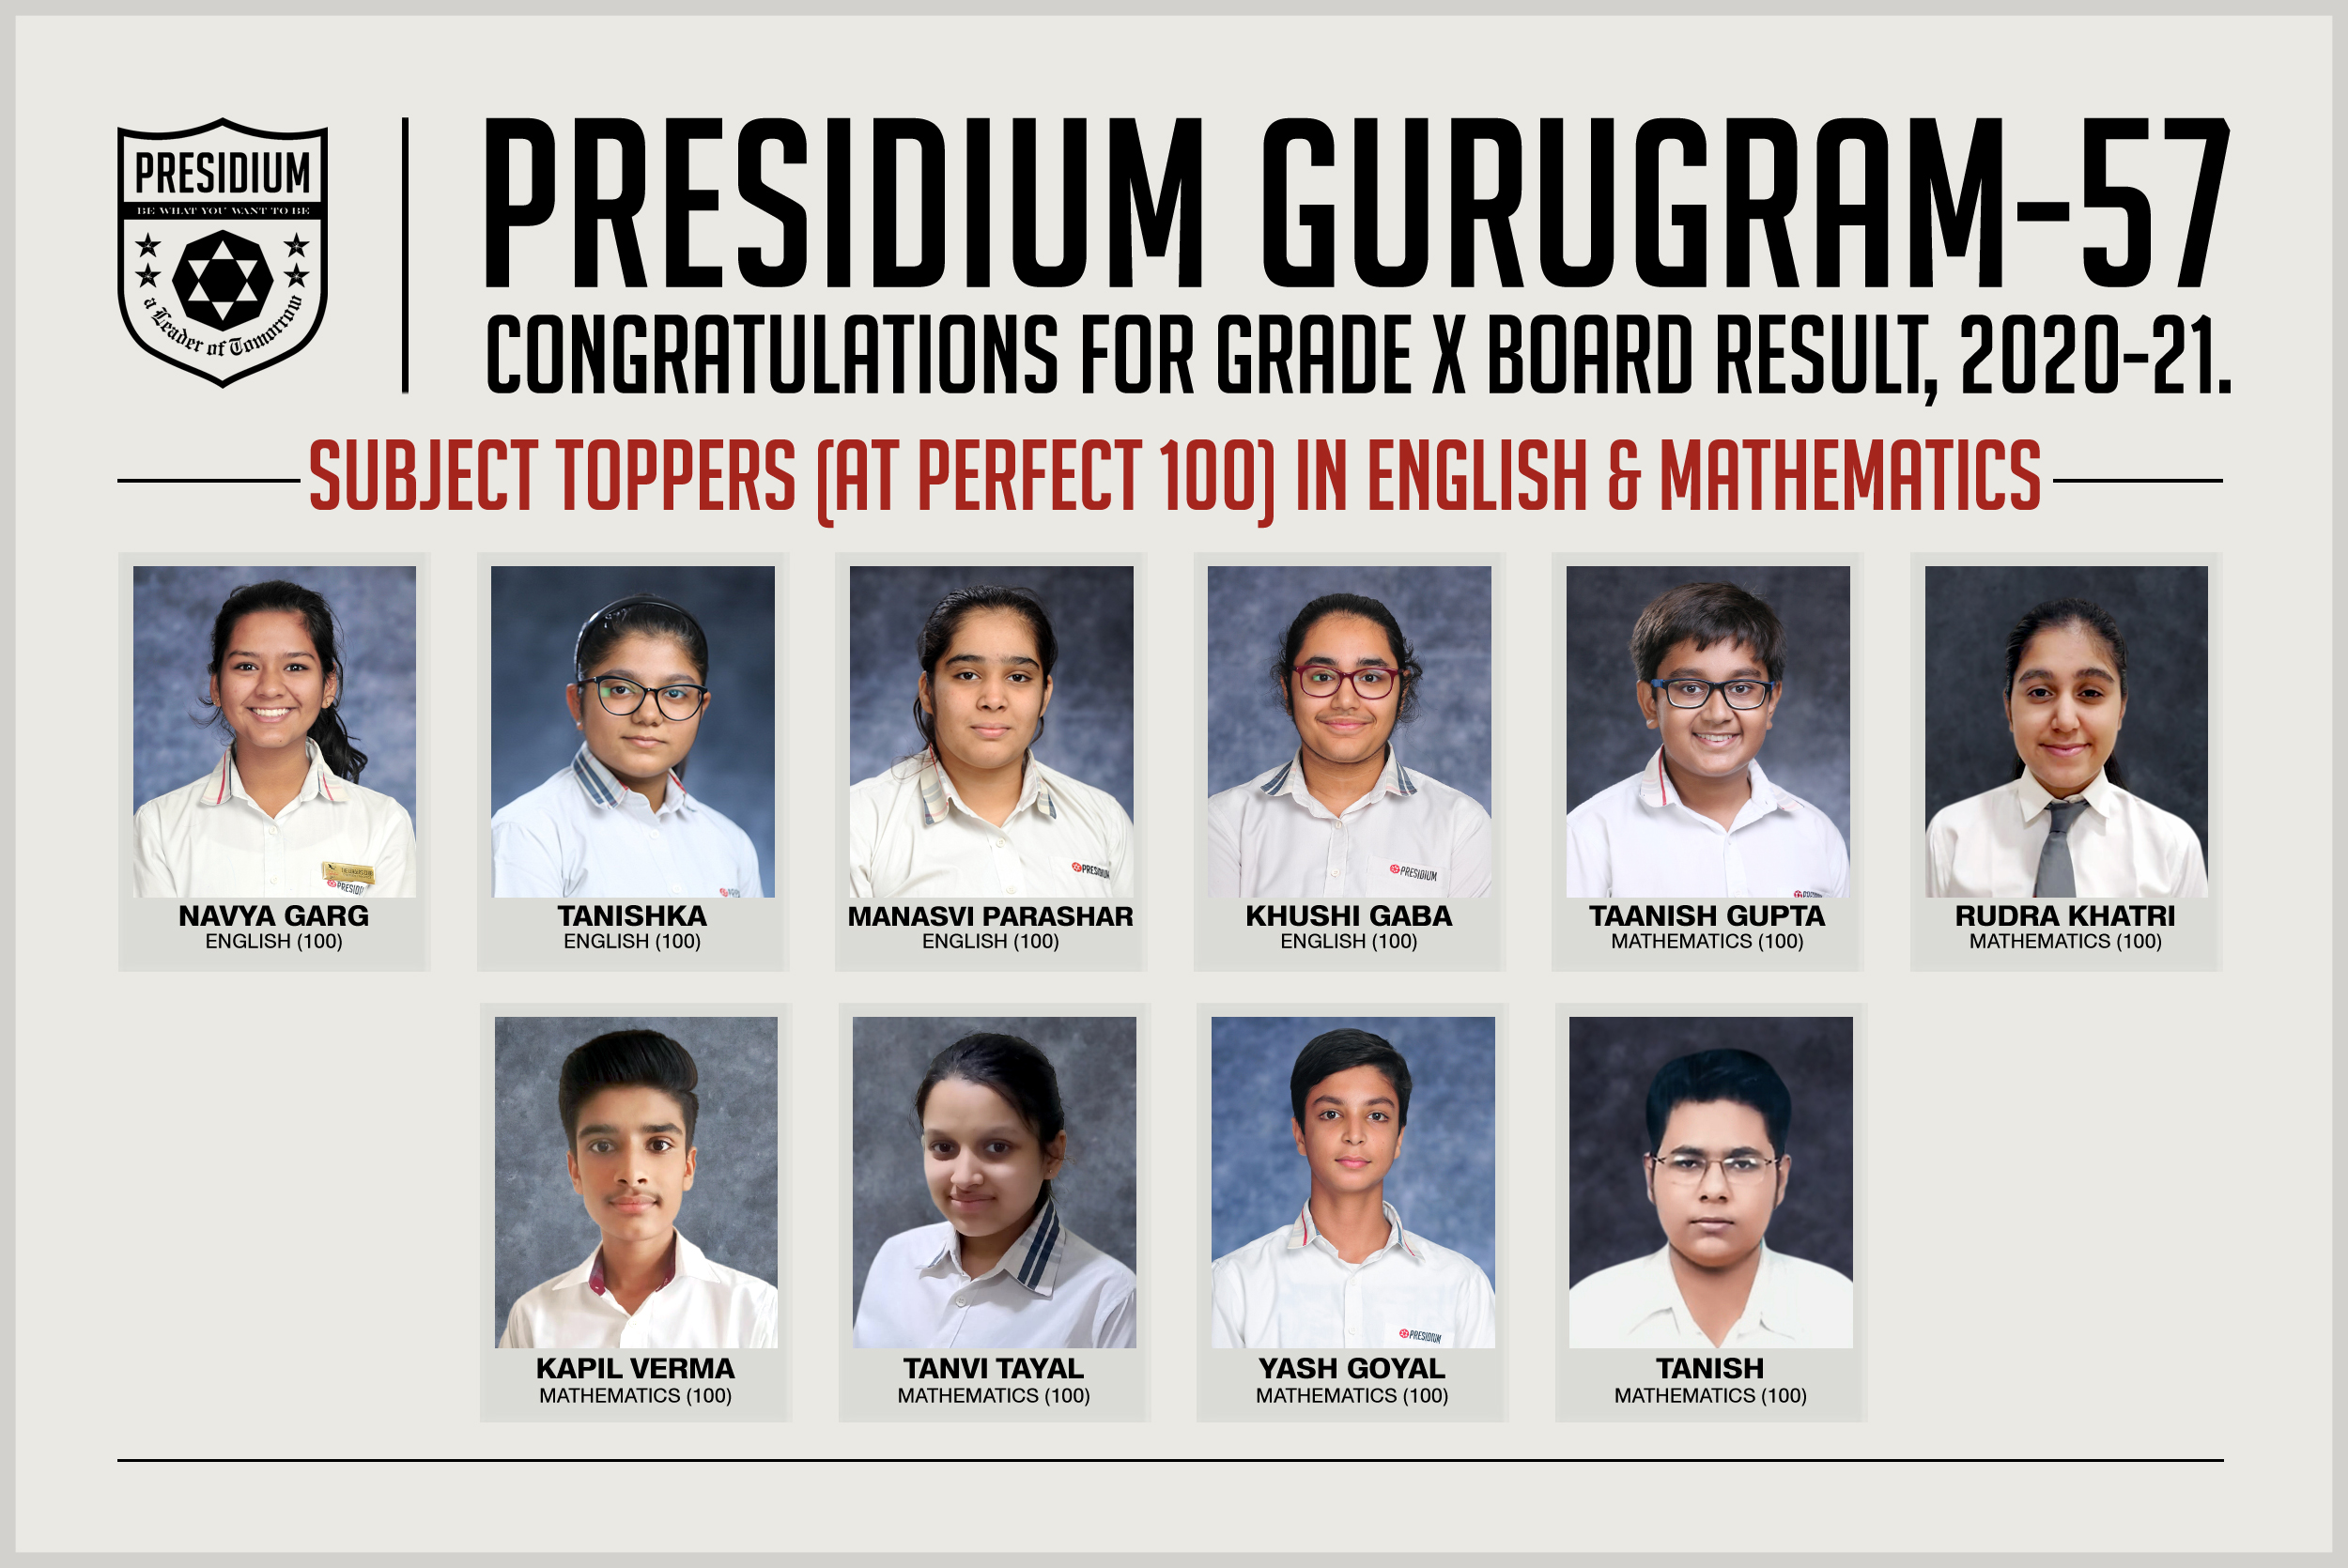 Presidium Gurgaon-57, KUDOS PRESIDIANS FOR EXCEPTIONAL XTH BOARD RESULTS (2020-21)